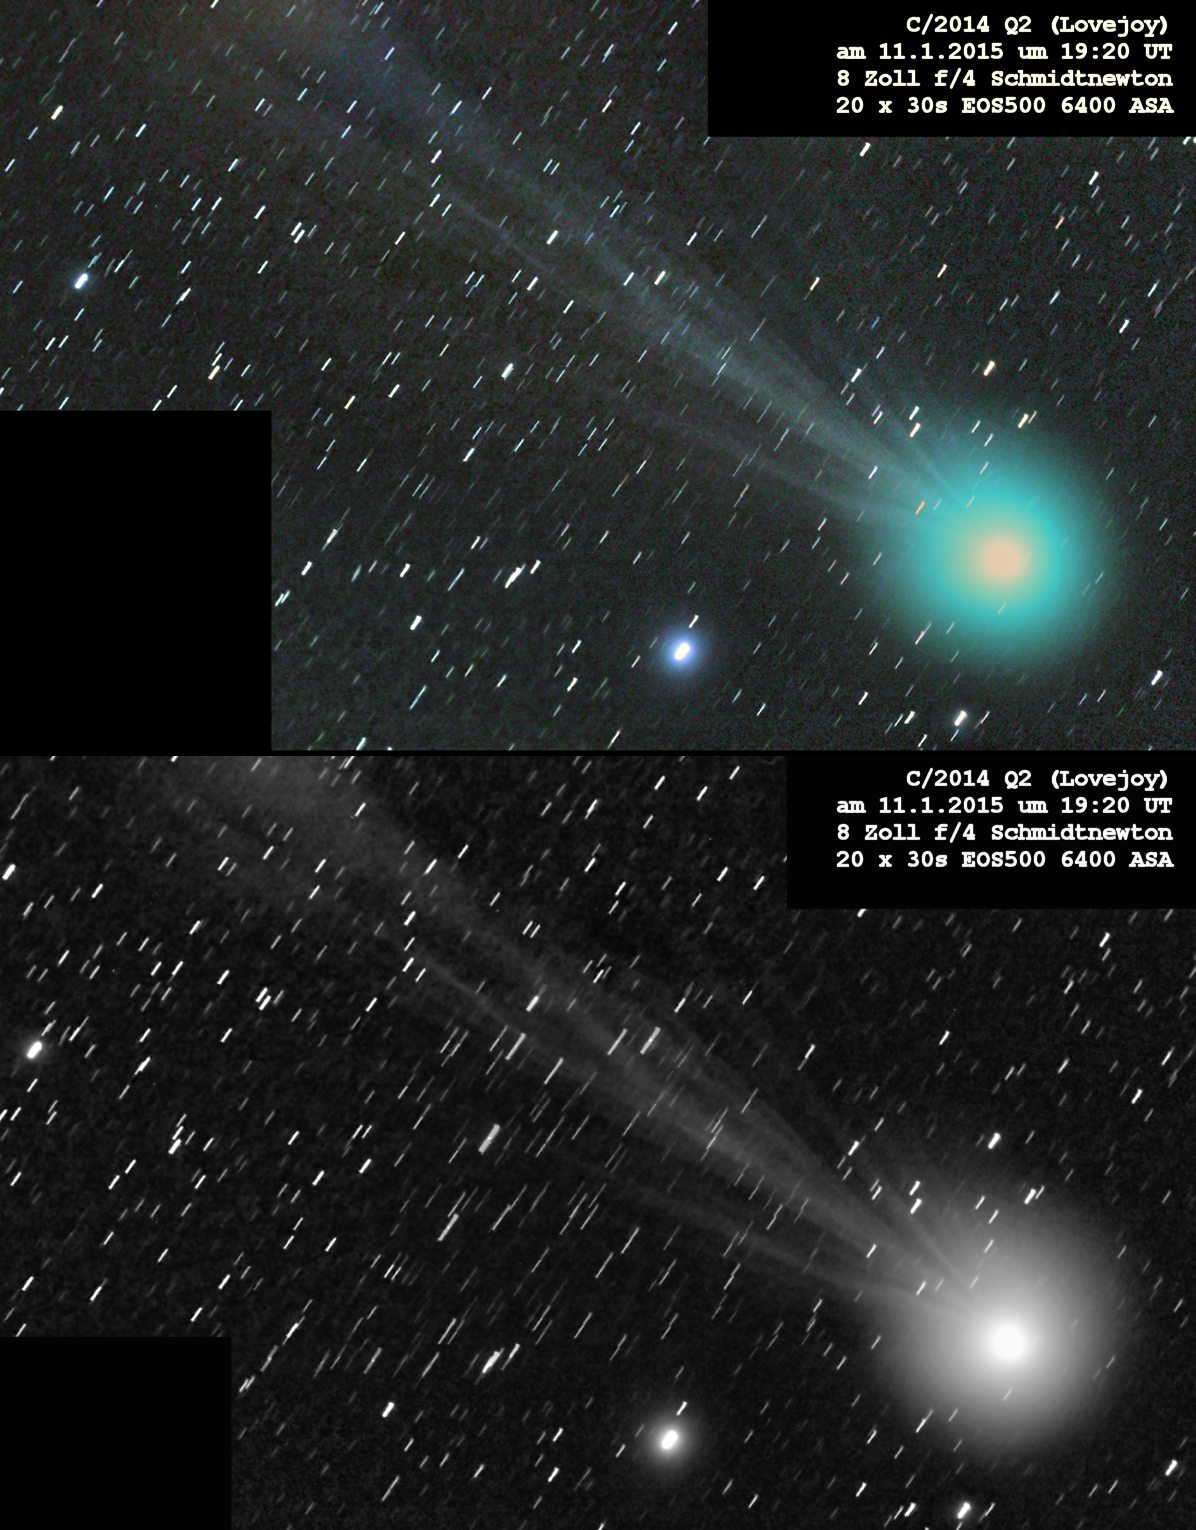 Komet Lovejoy am 11.1.2015